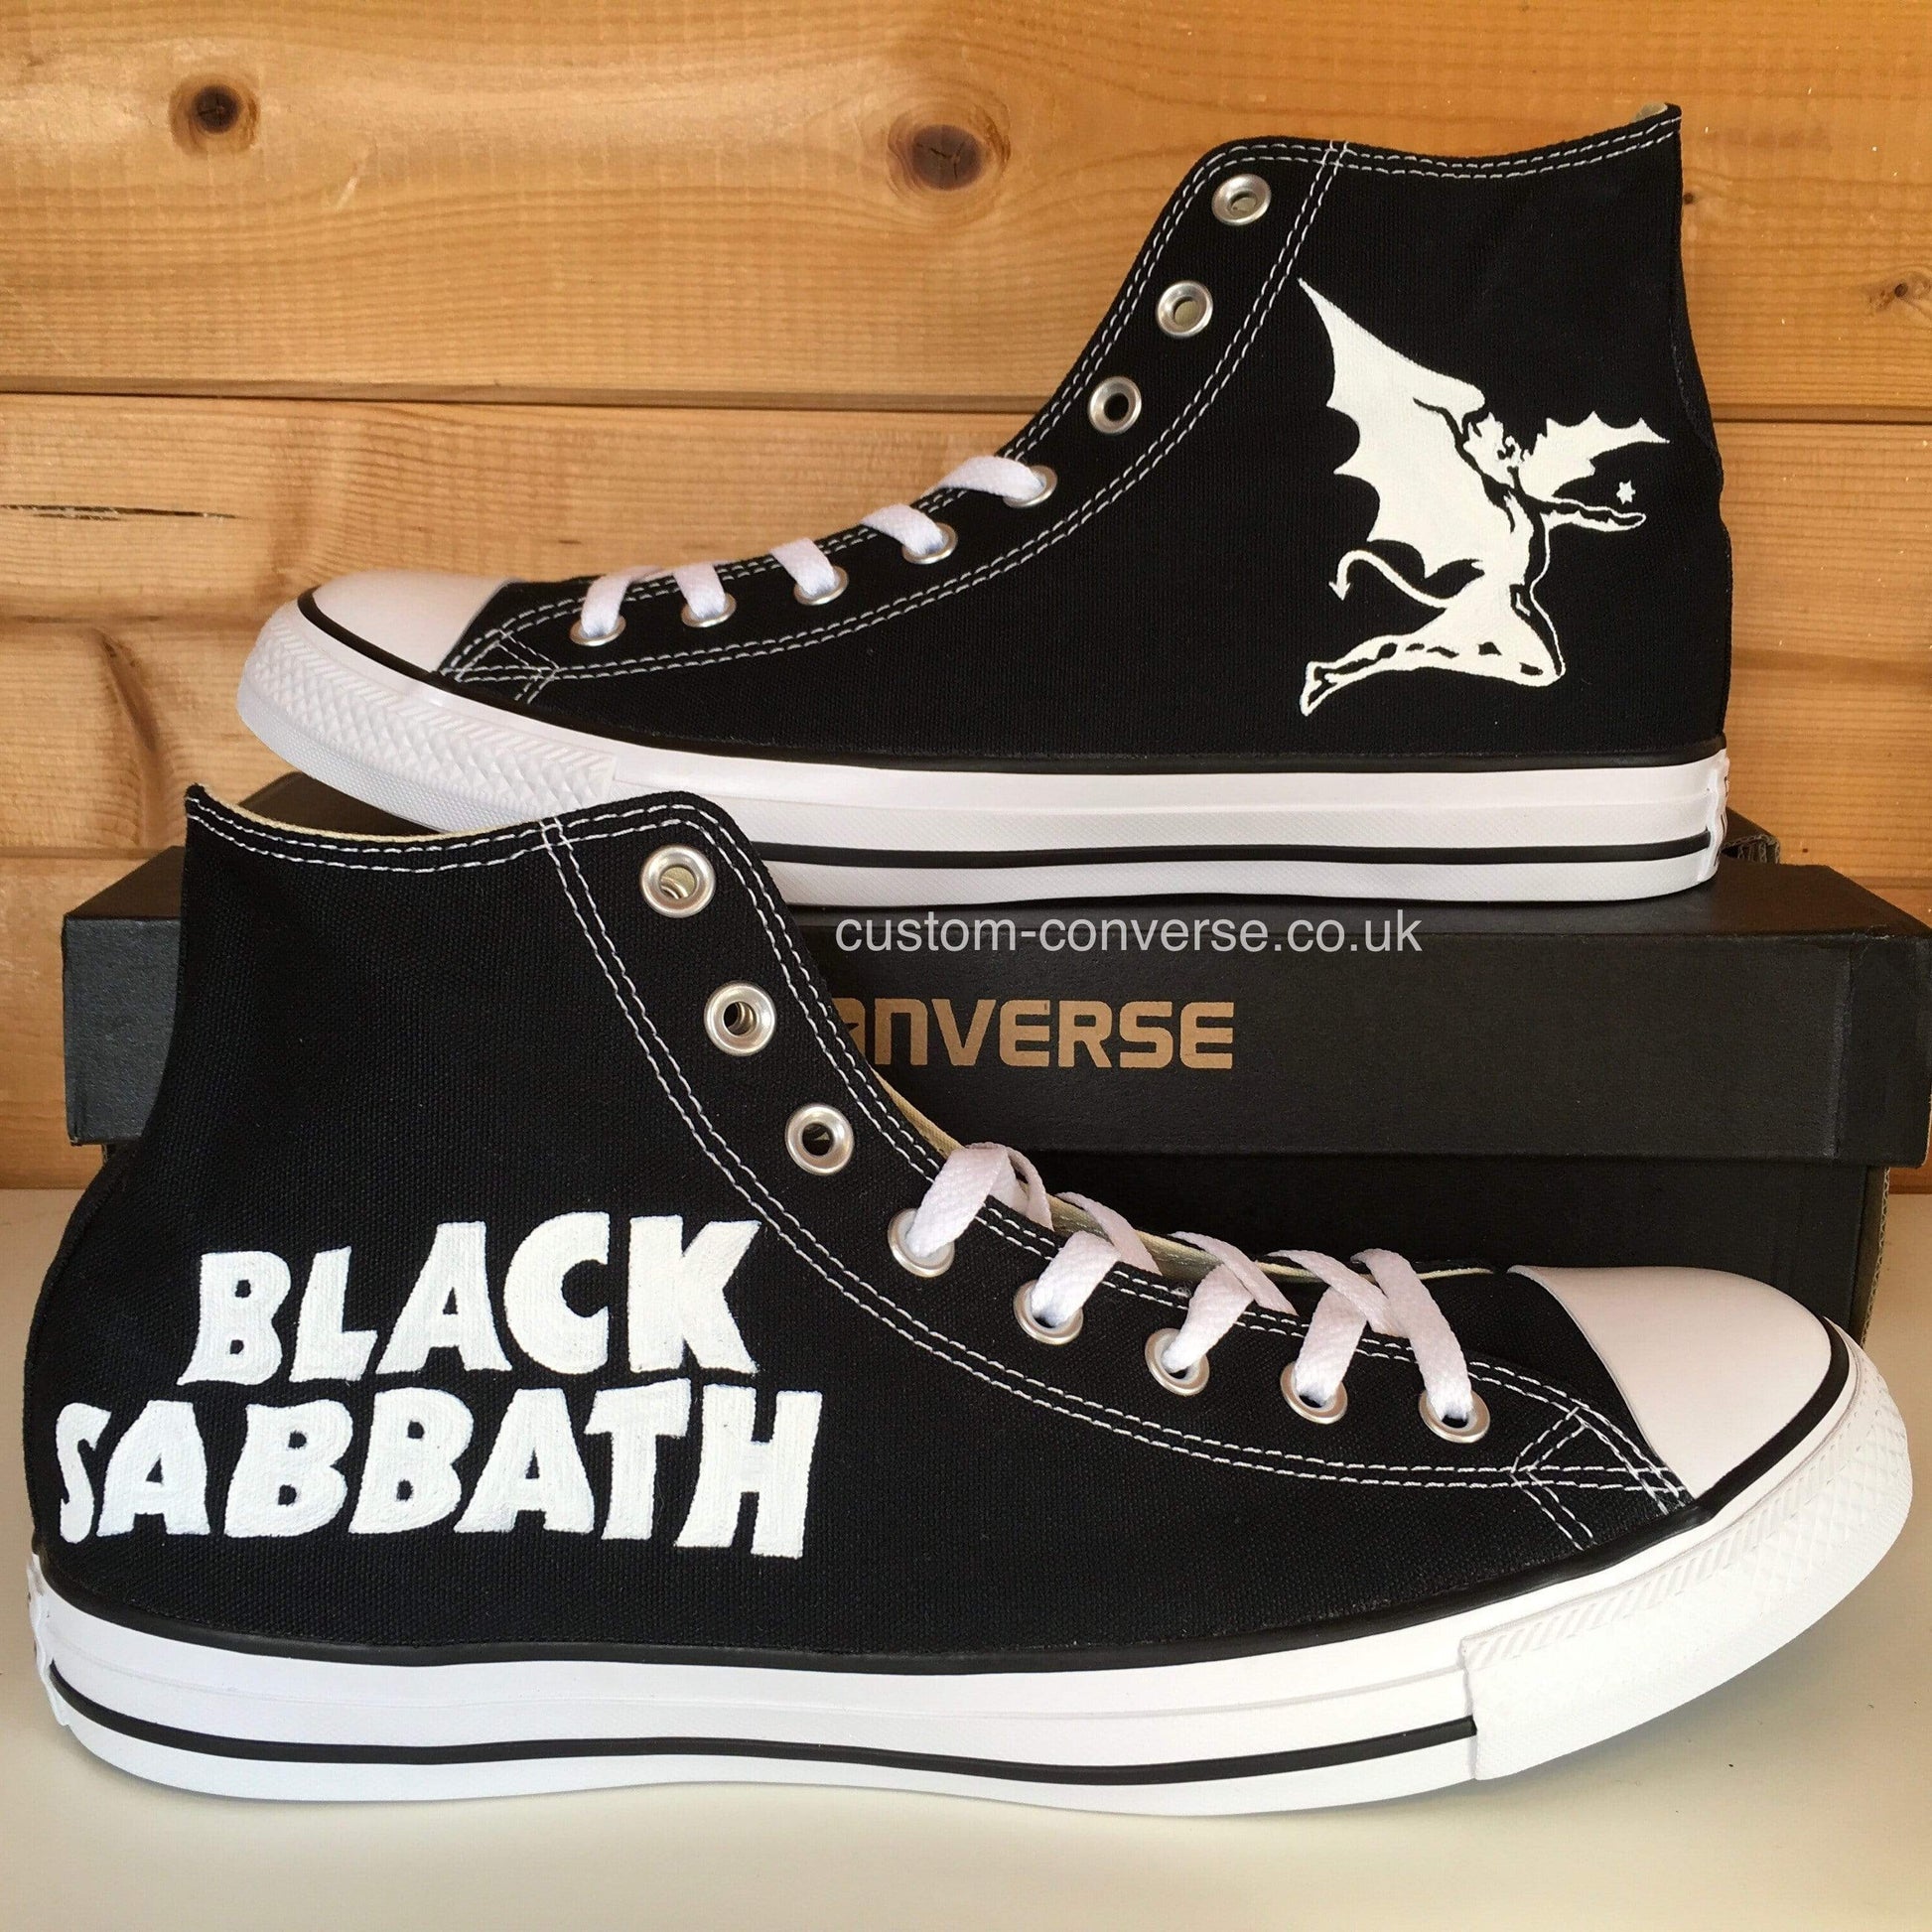 Black Sabbath - Custom Converse Ltd.